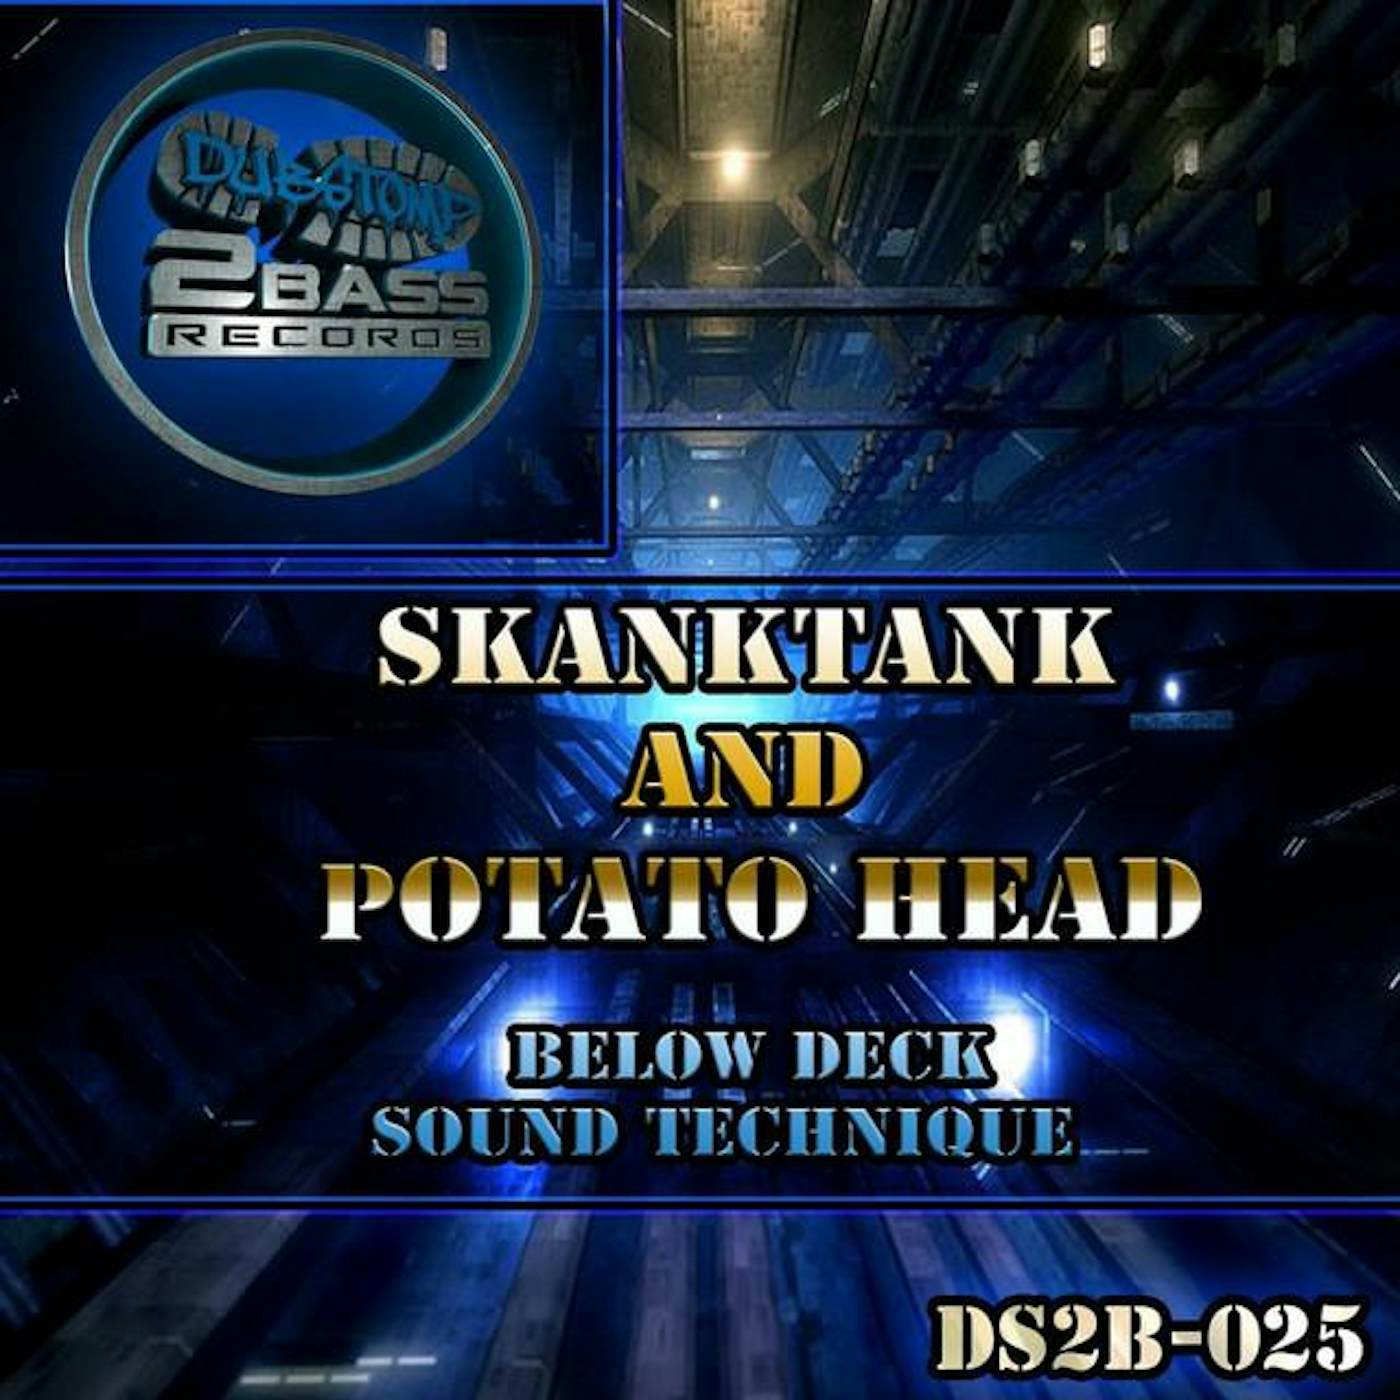 Potato Head